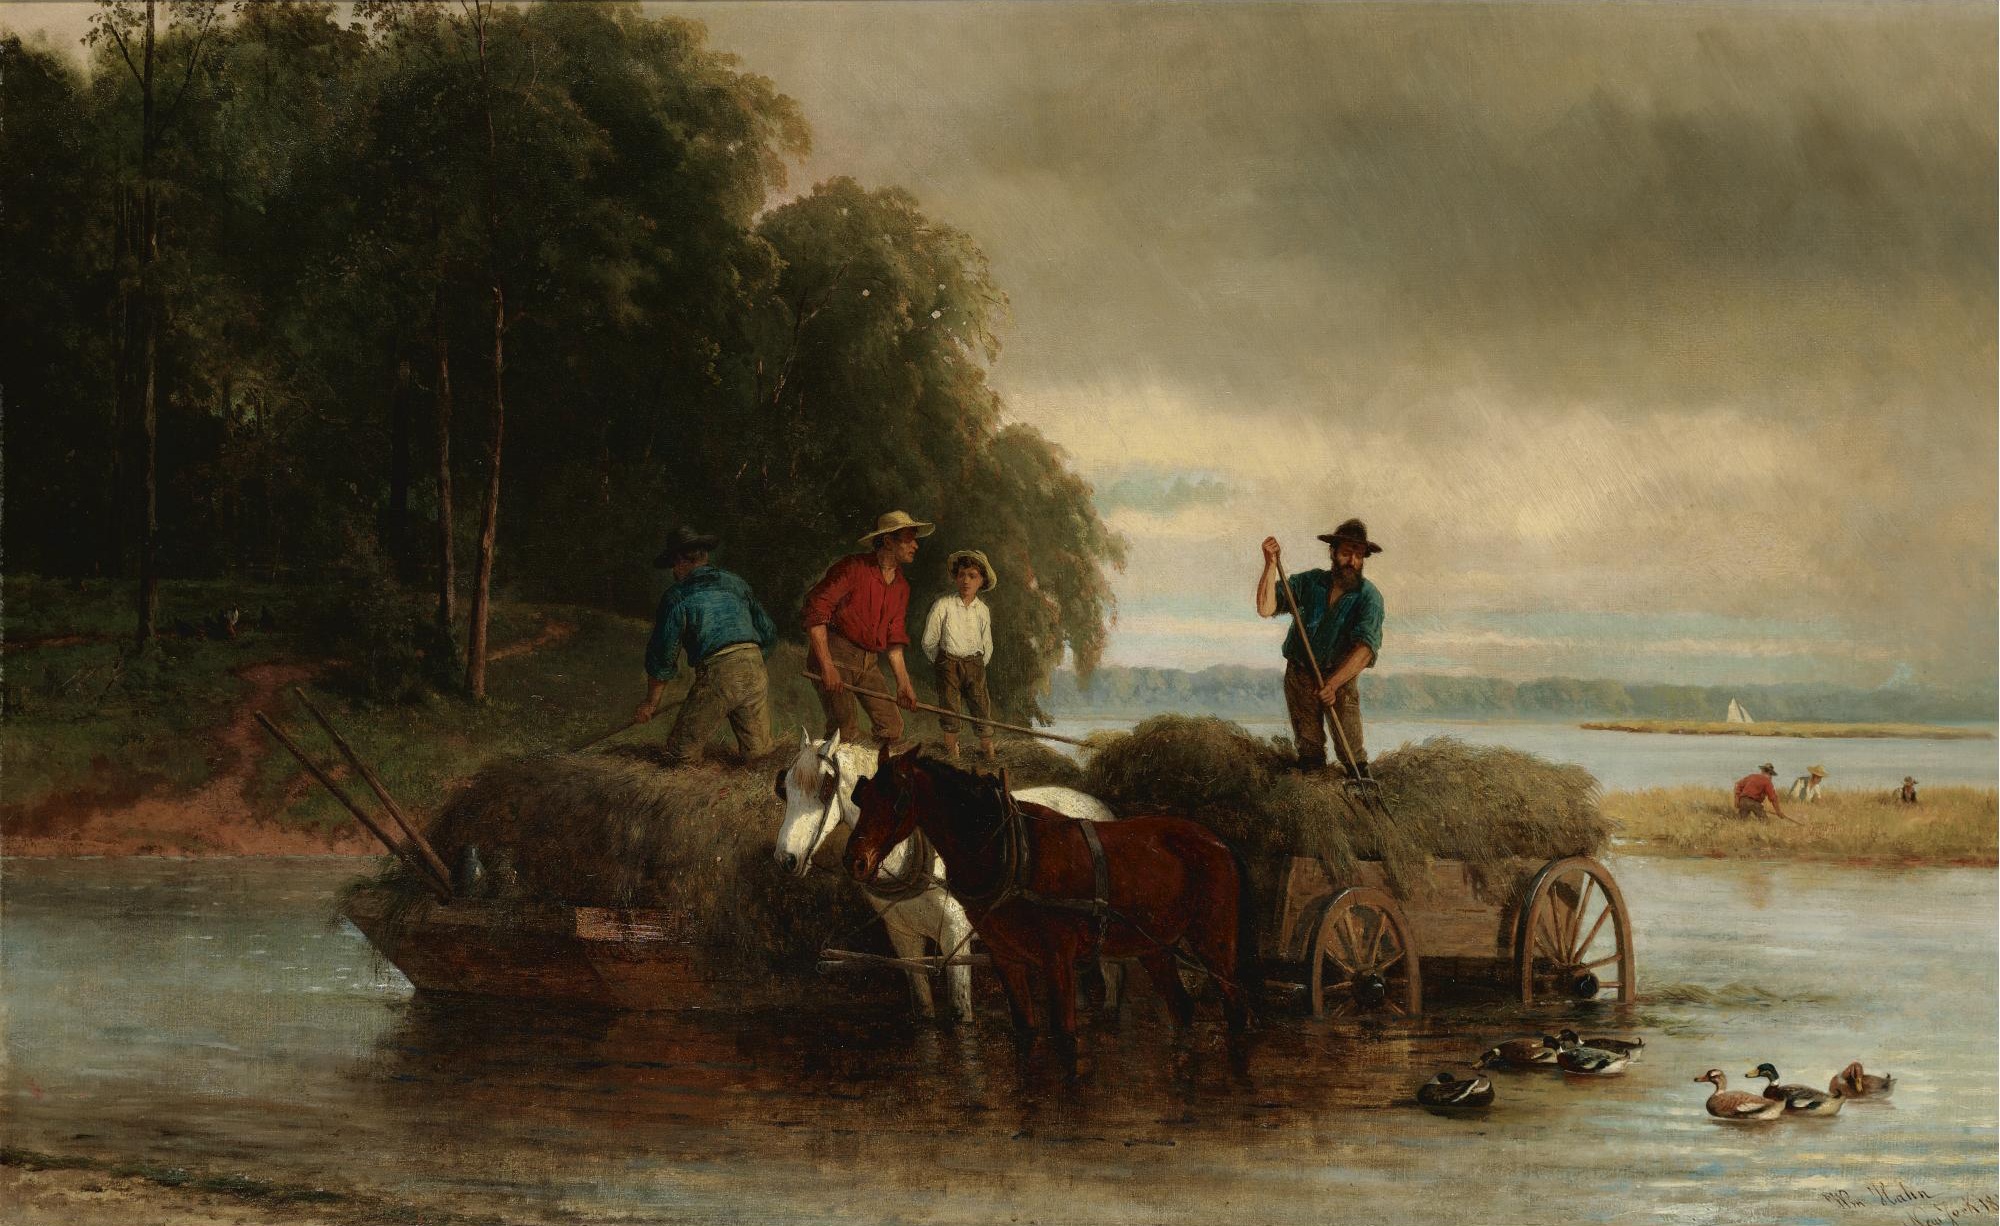 William Hahn - Gathering sedge, Shrewsbury River, New Jersey